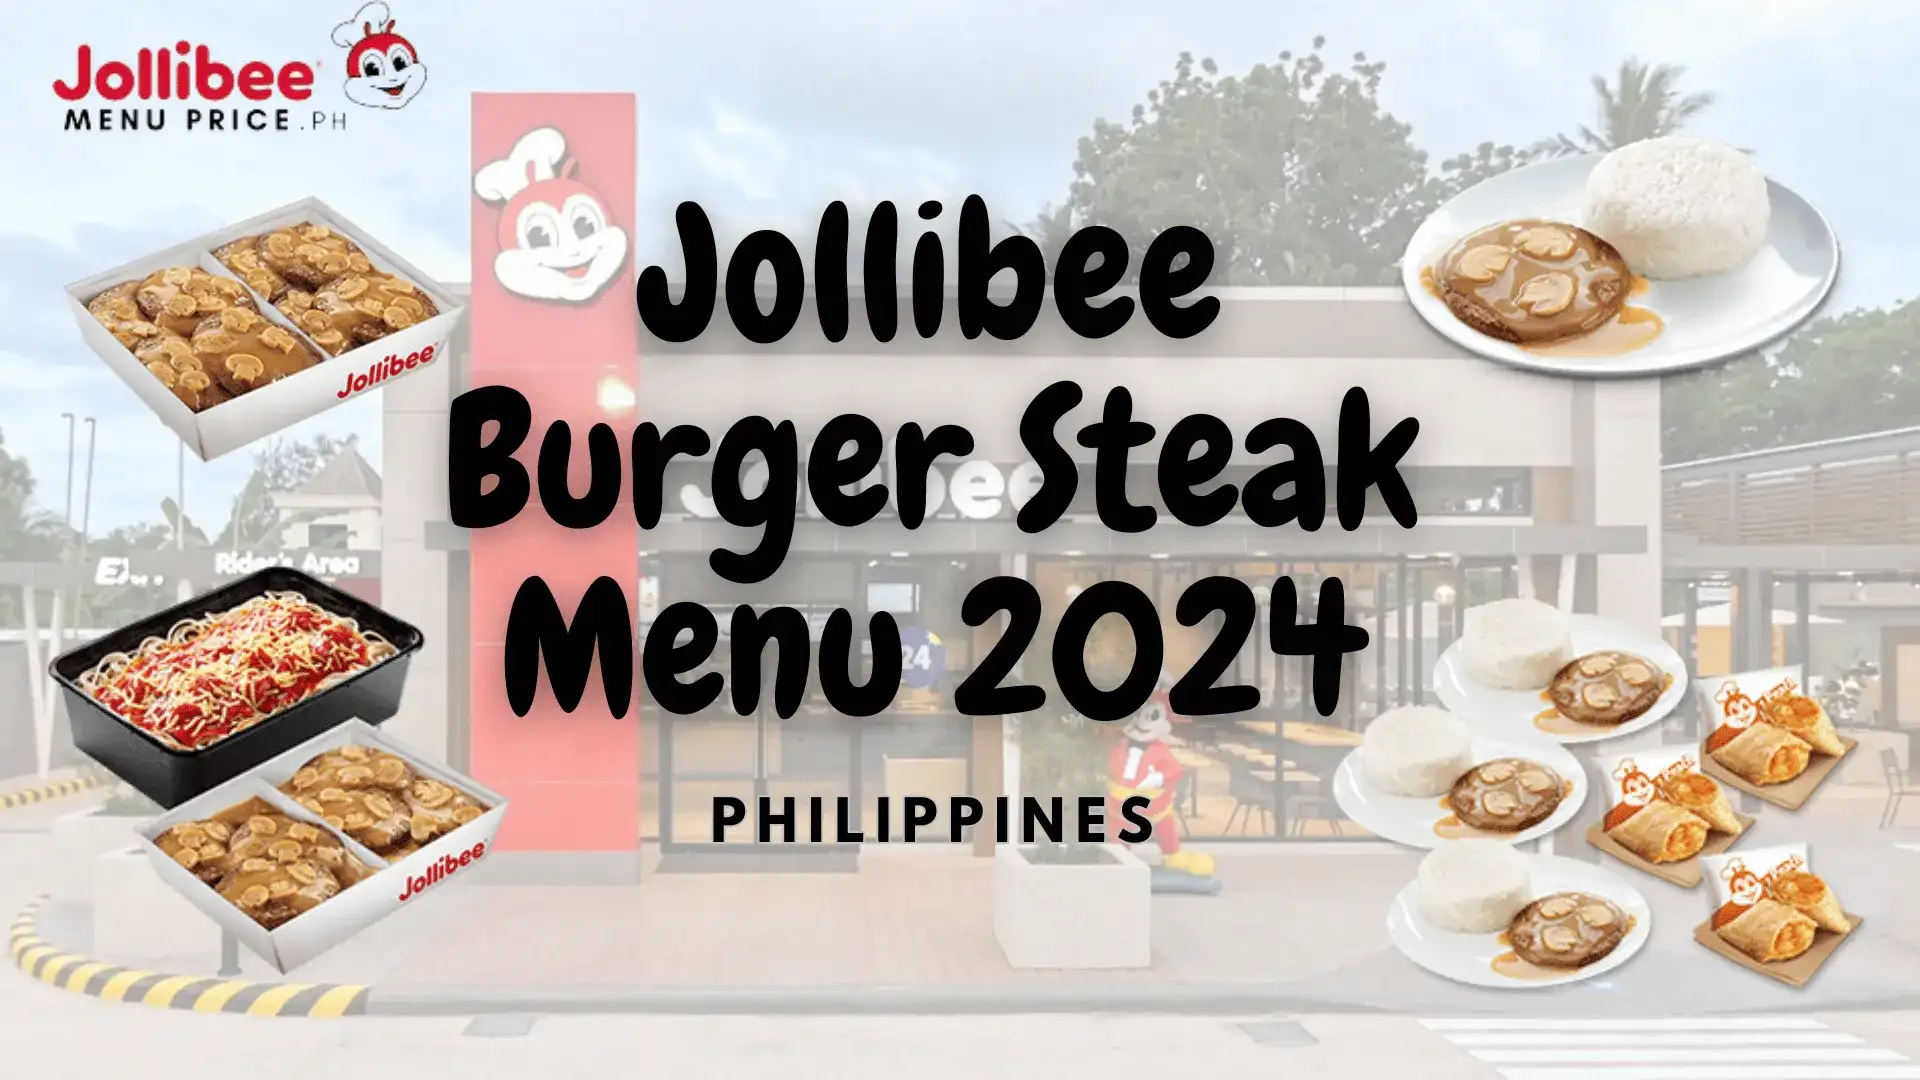 Jollibee burger steak menu